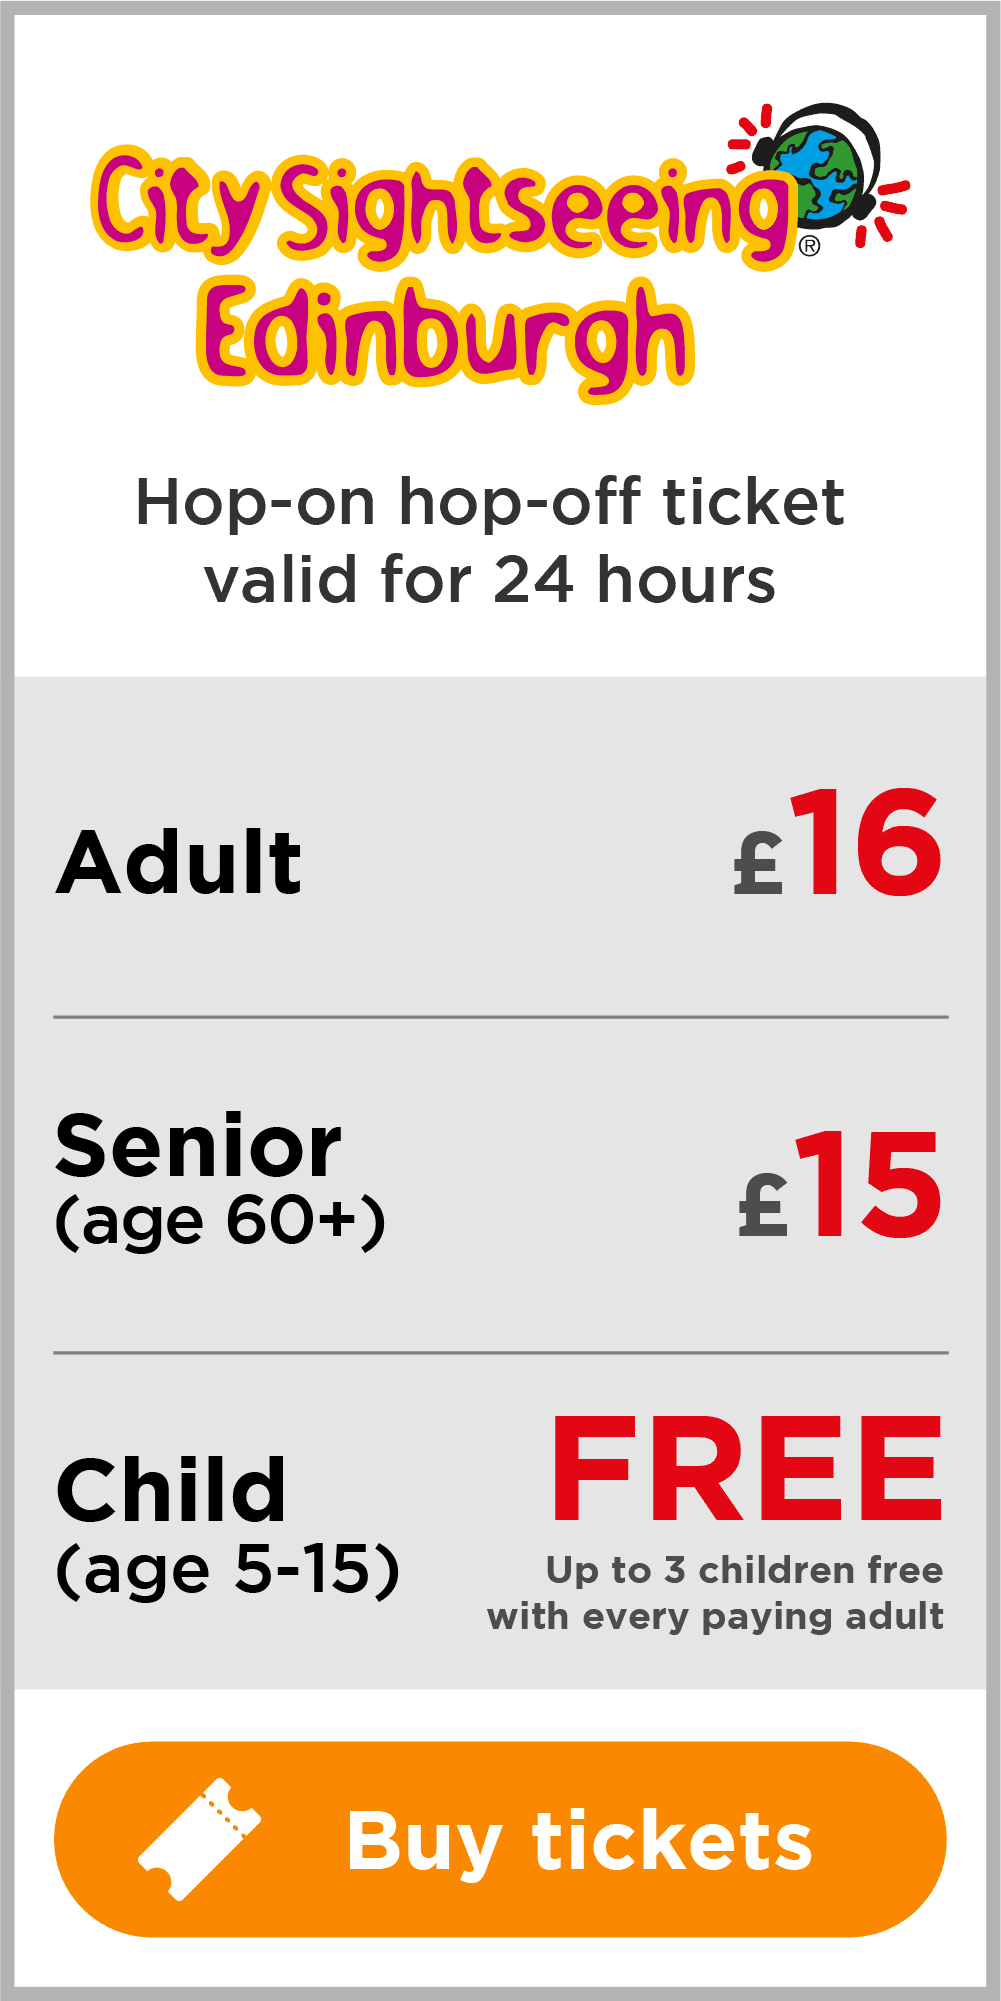 CitySightseeing Edinburgh Tour Tickets, £16 adult £15 senior child for free